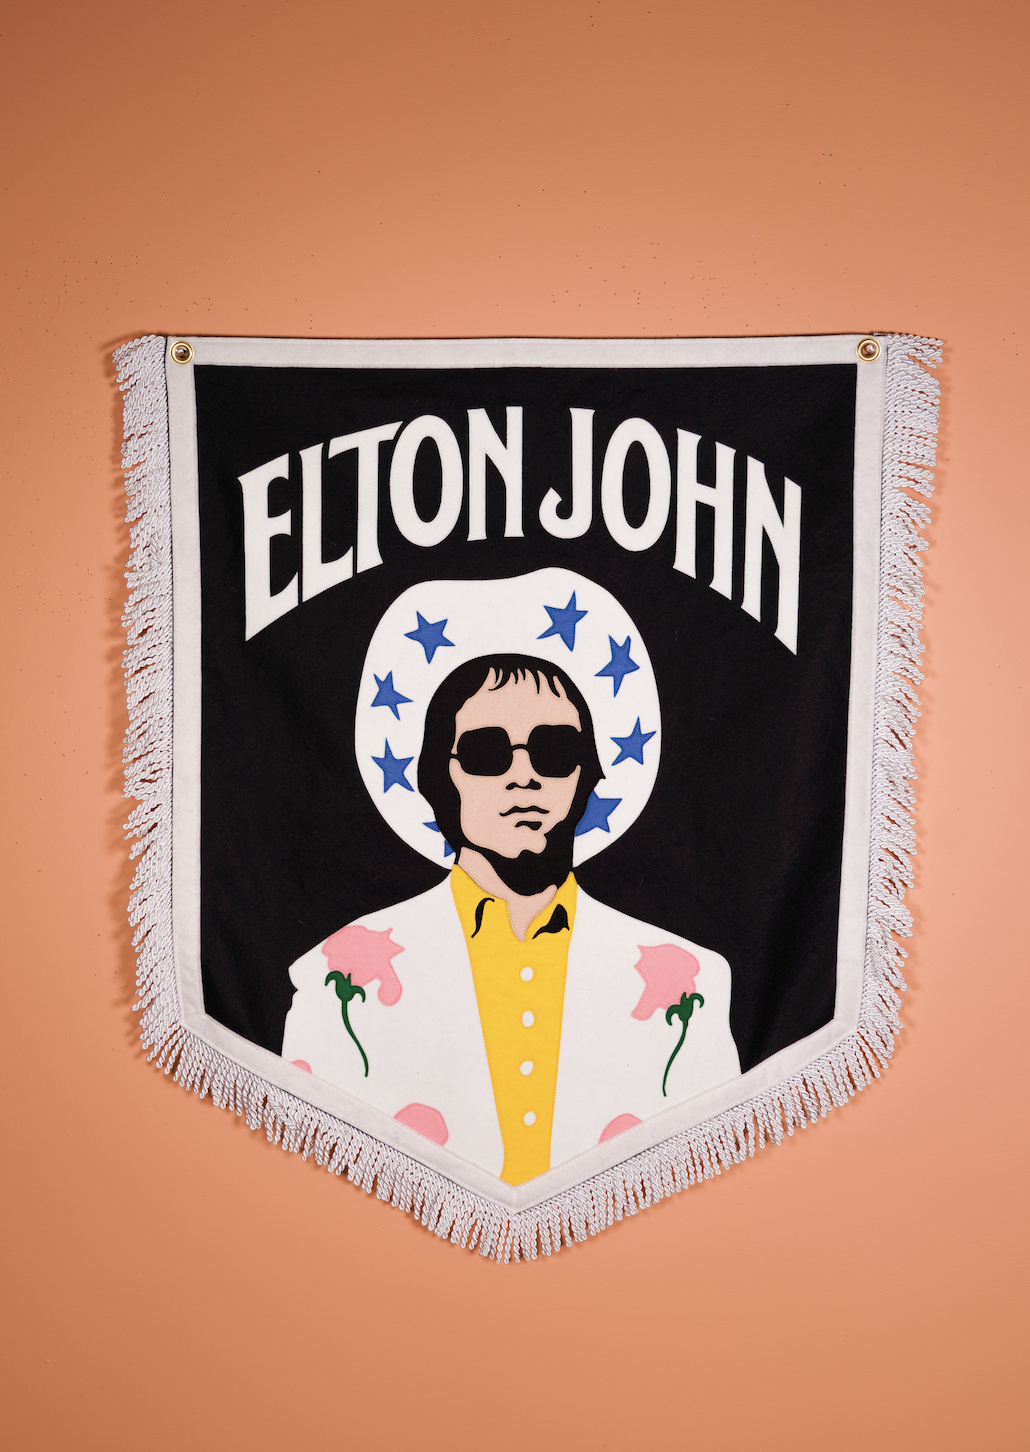 Elton John - Elton John x Oxford Pennant - Cowboy Banner